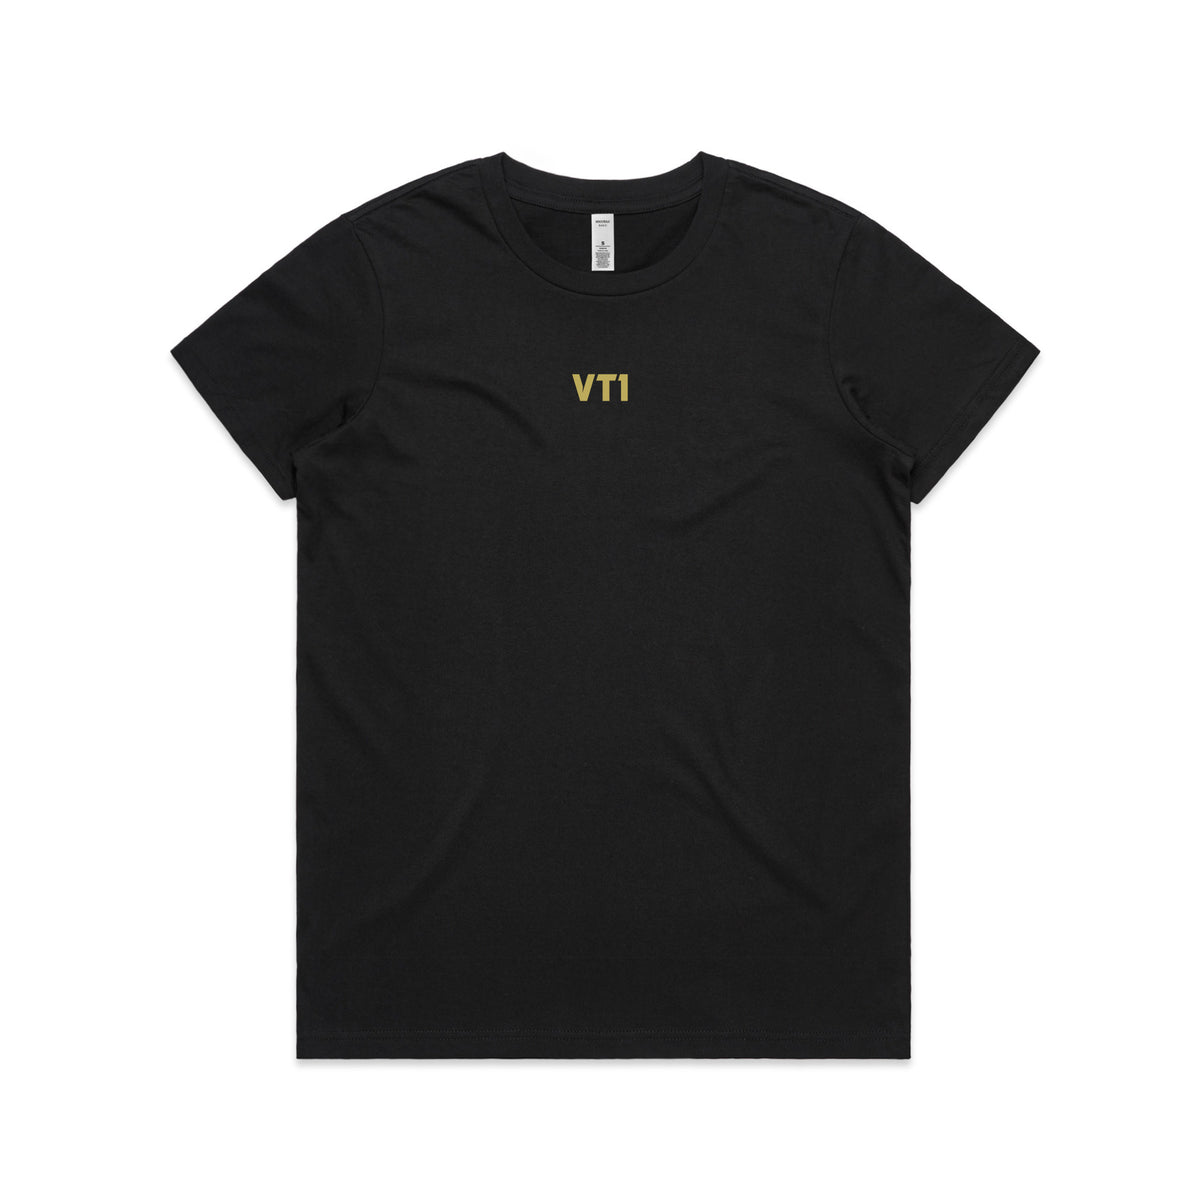 VT1 Basic T-Shirt - Adults